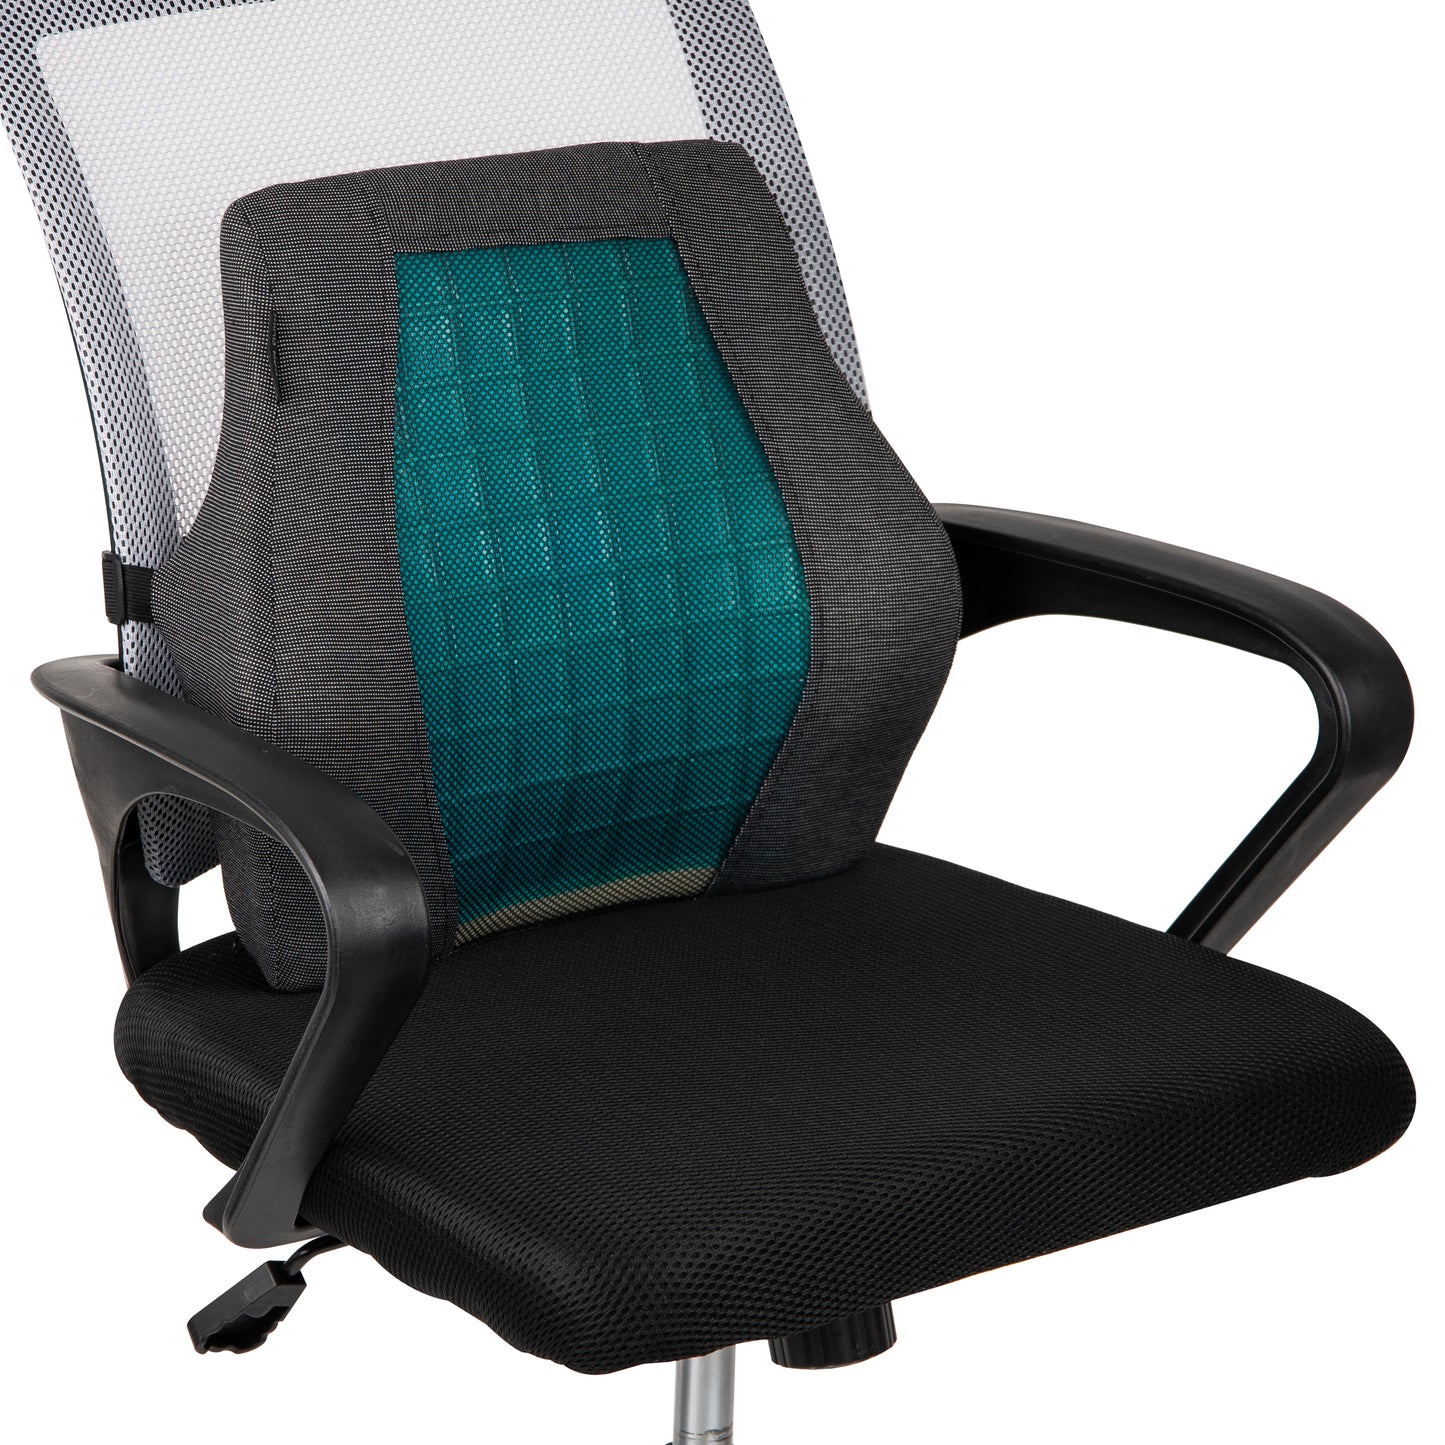 Gel Seat Cushion, Pressure Relief with Non-Slip Cover Ergonomics